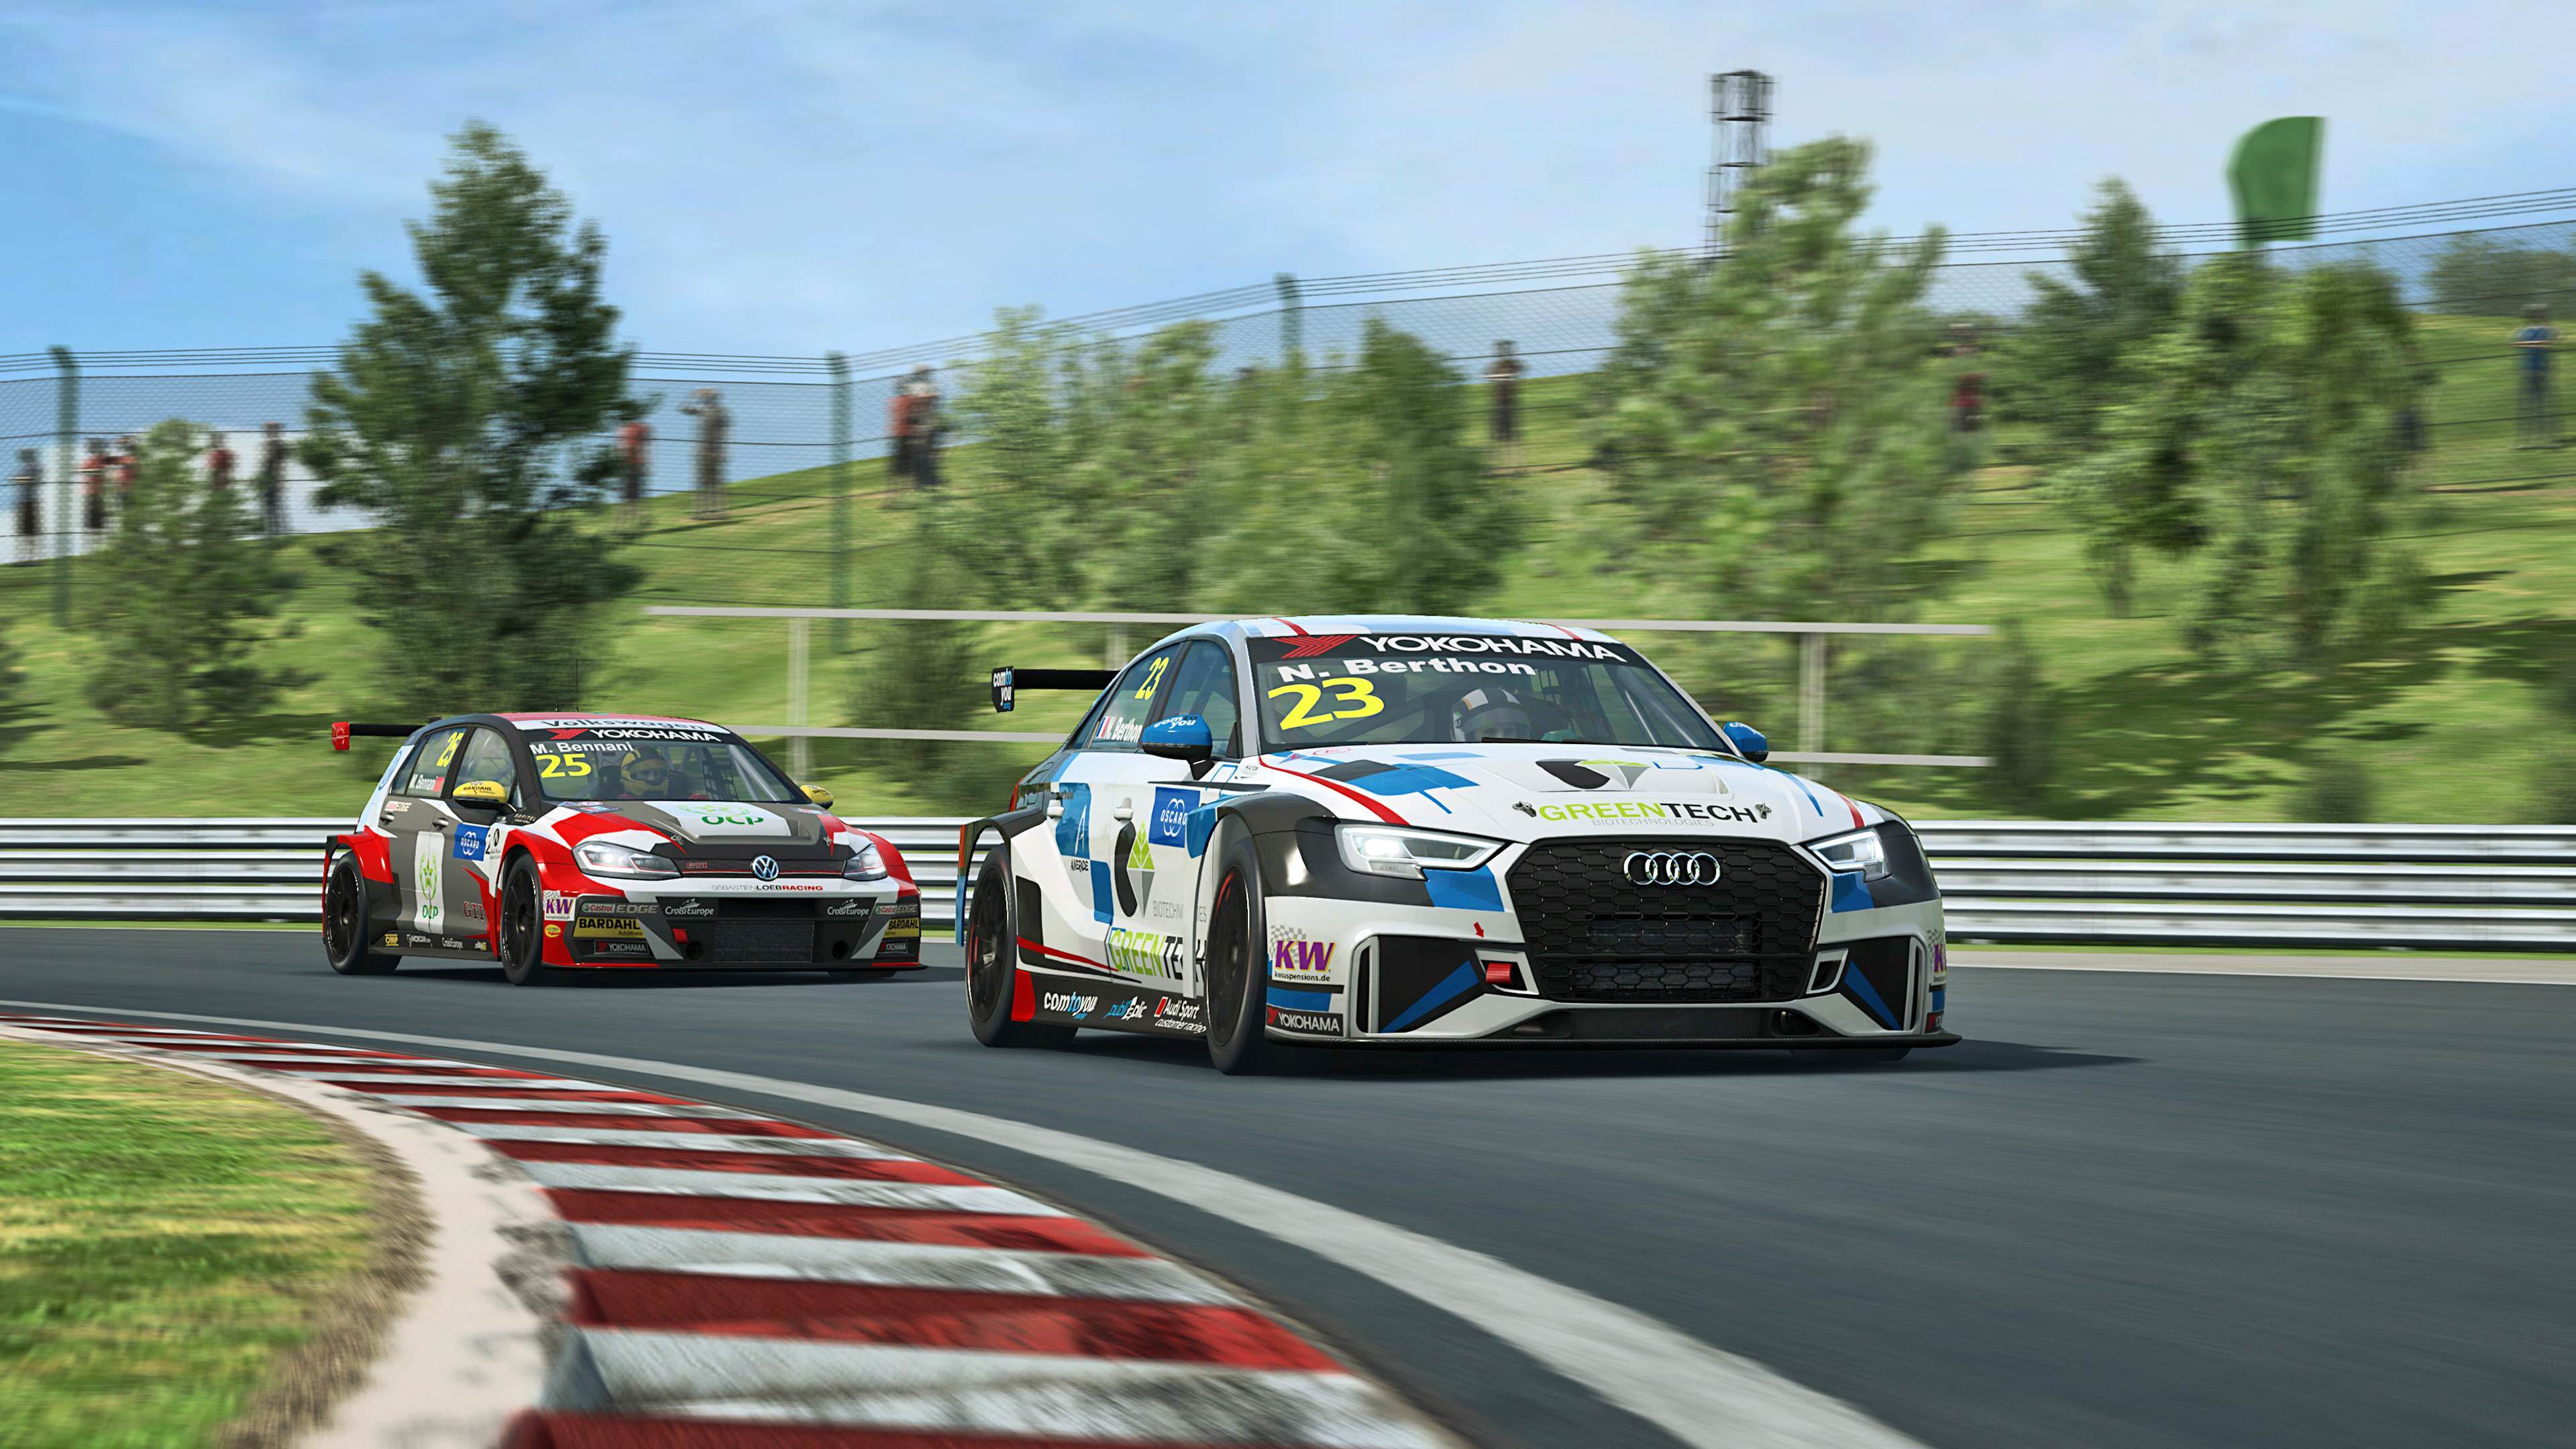 Audi TT cup 2015 - Store - RaceRoom Racing Experience